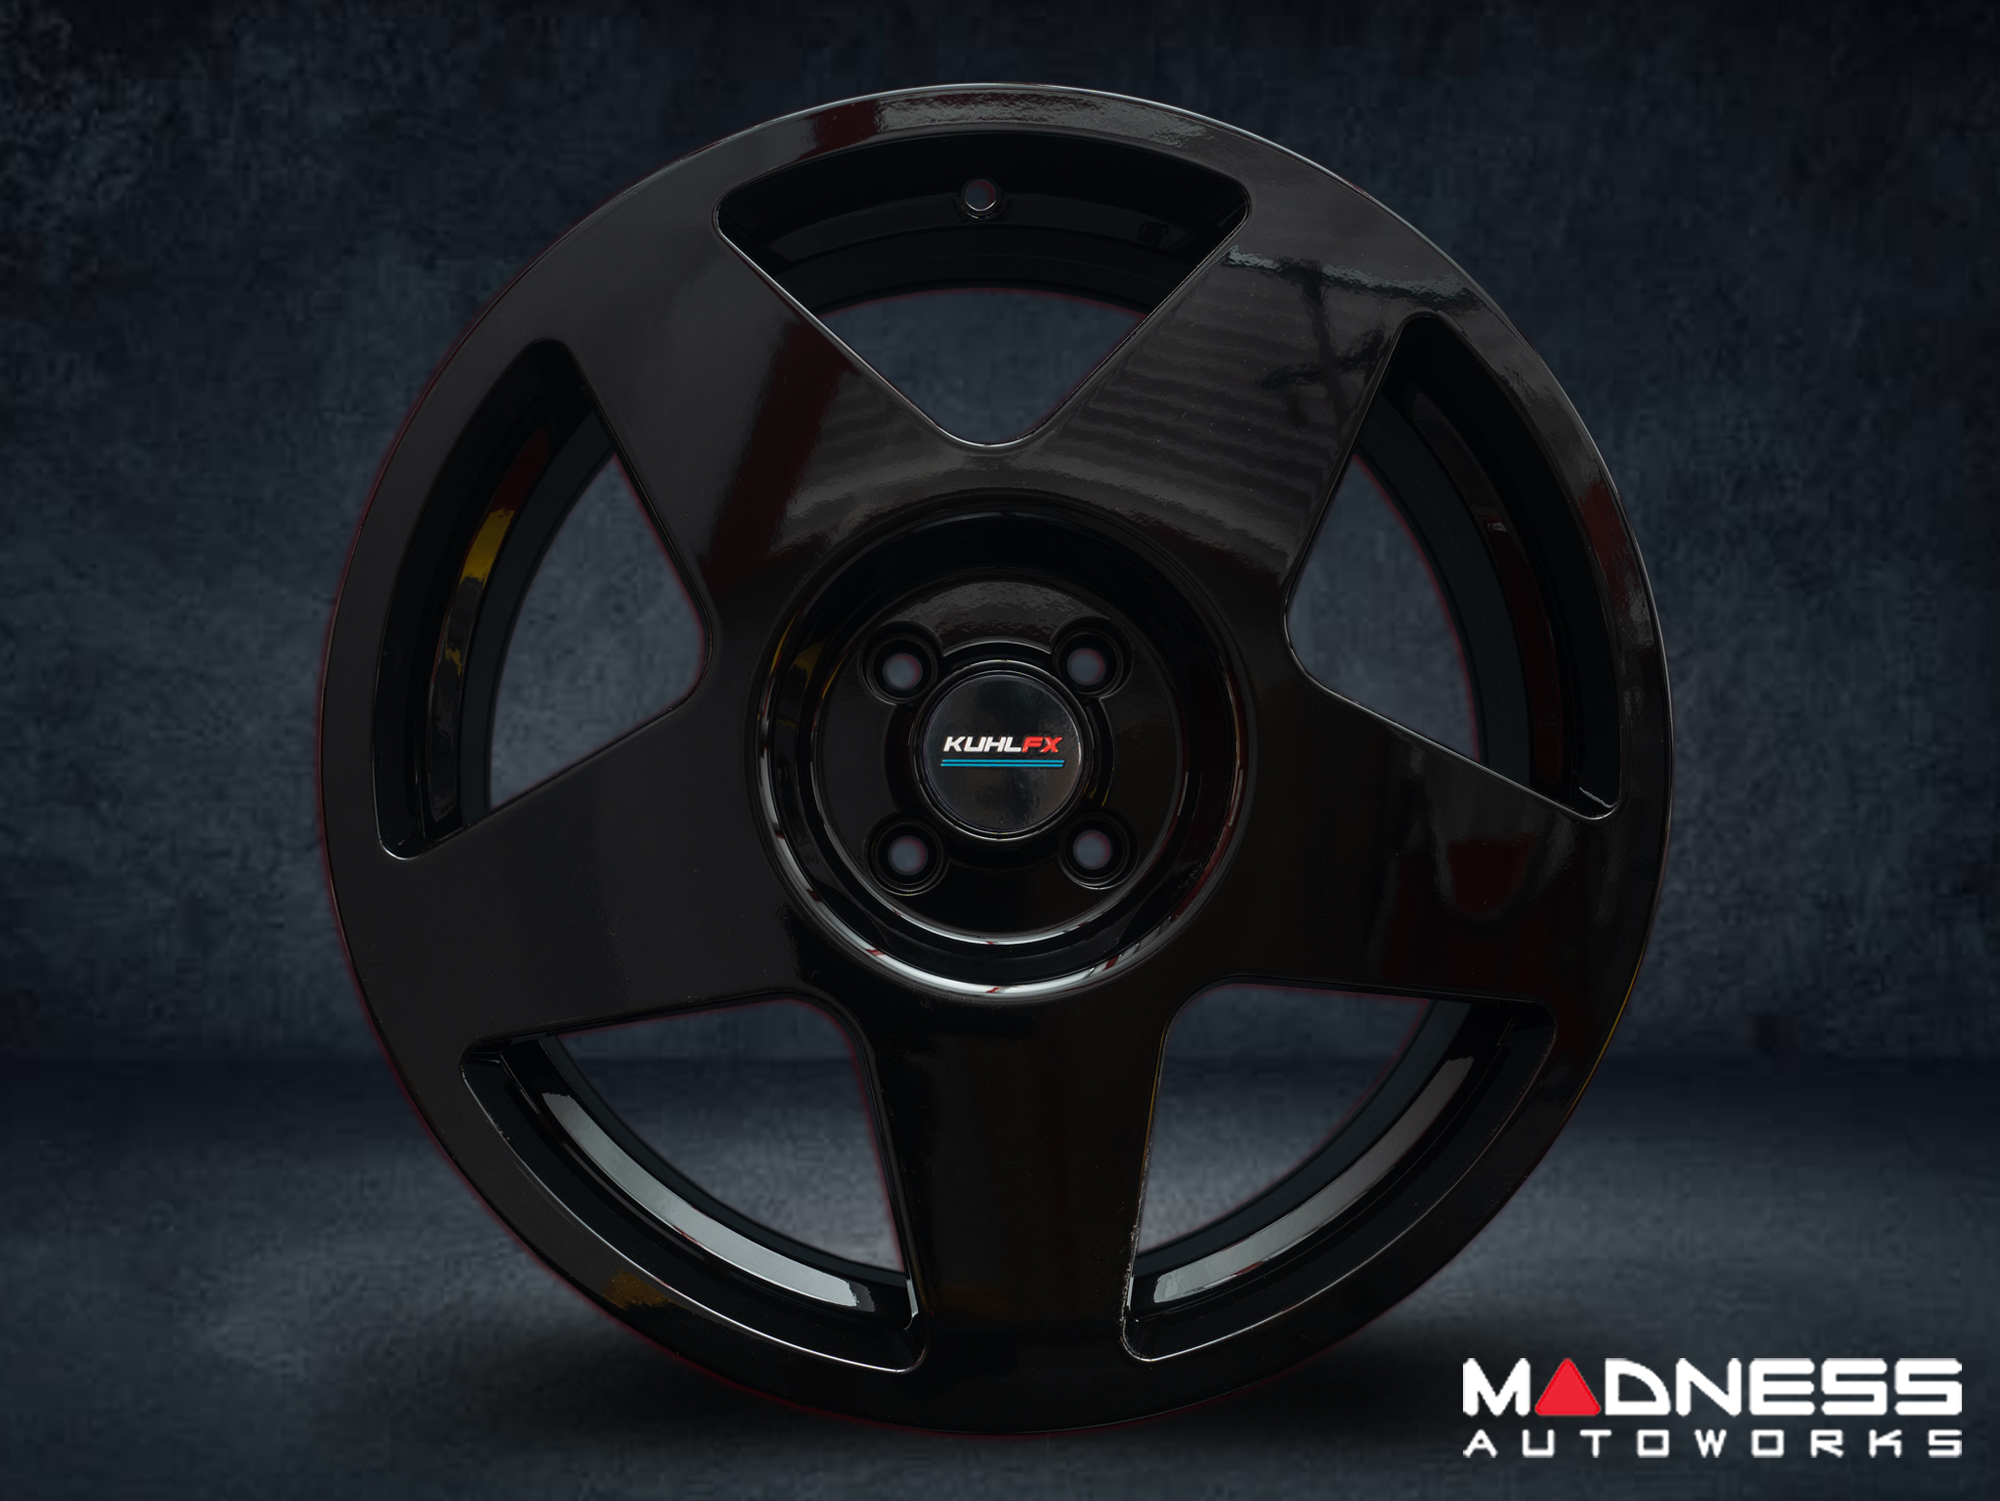 MAZDA Miata/ MX-5 Custom Wheels - KUHLFX - Pista - Gloss Black - Single Wheel - 17"